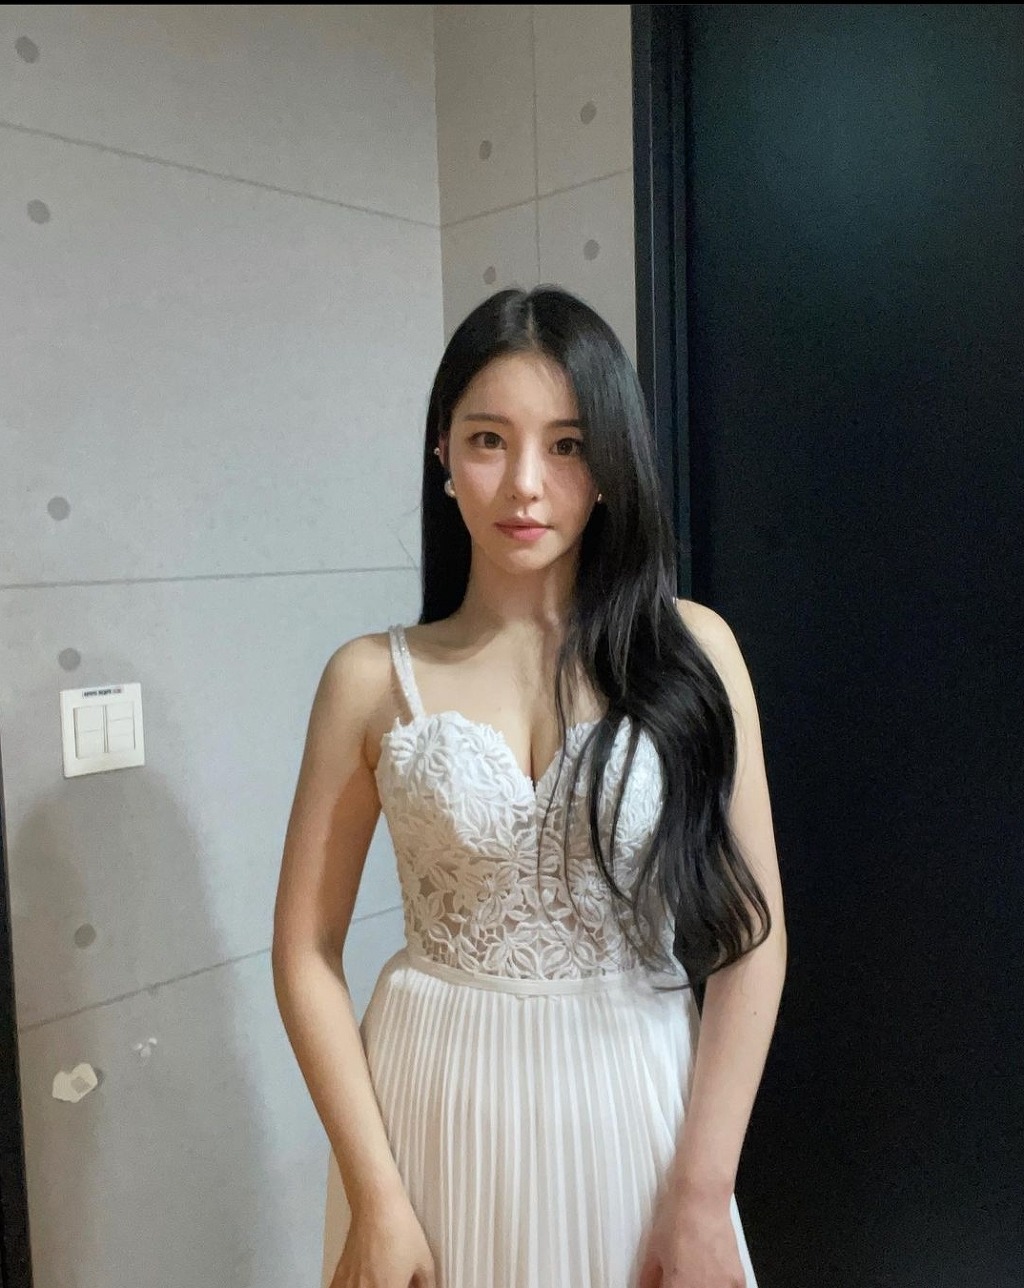 MBC Entertainment Awards Brave Girls Yoojung Dress.